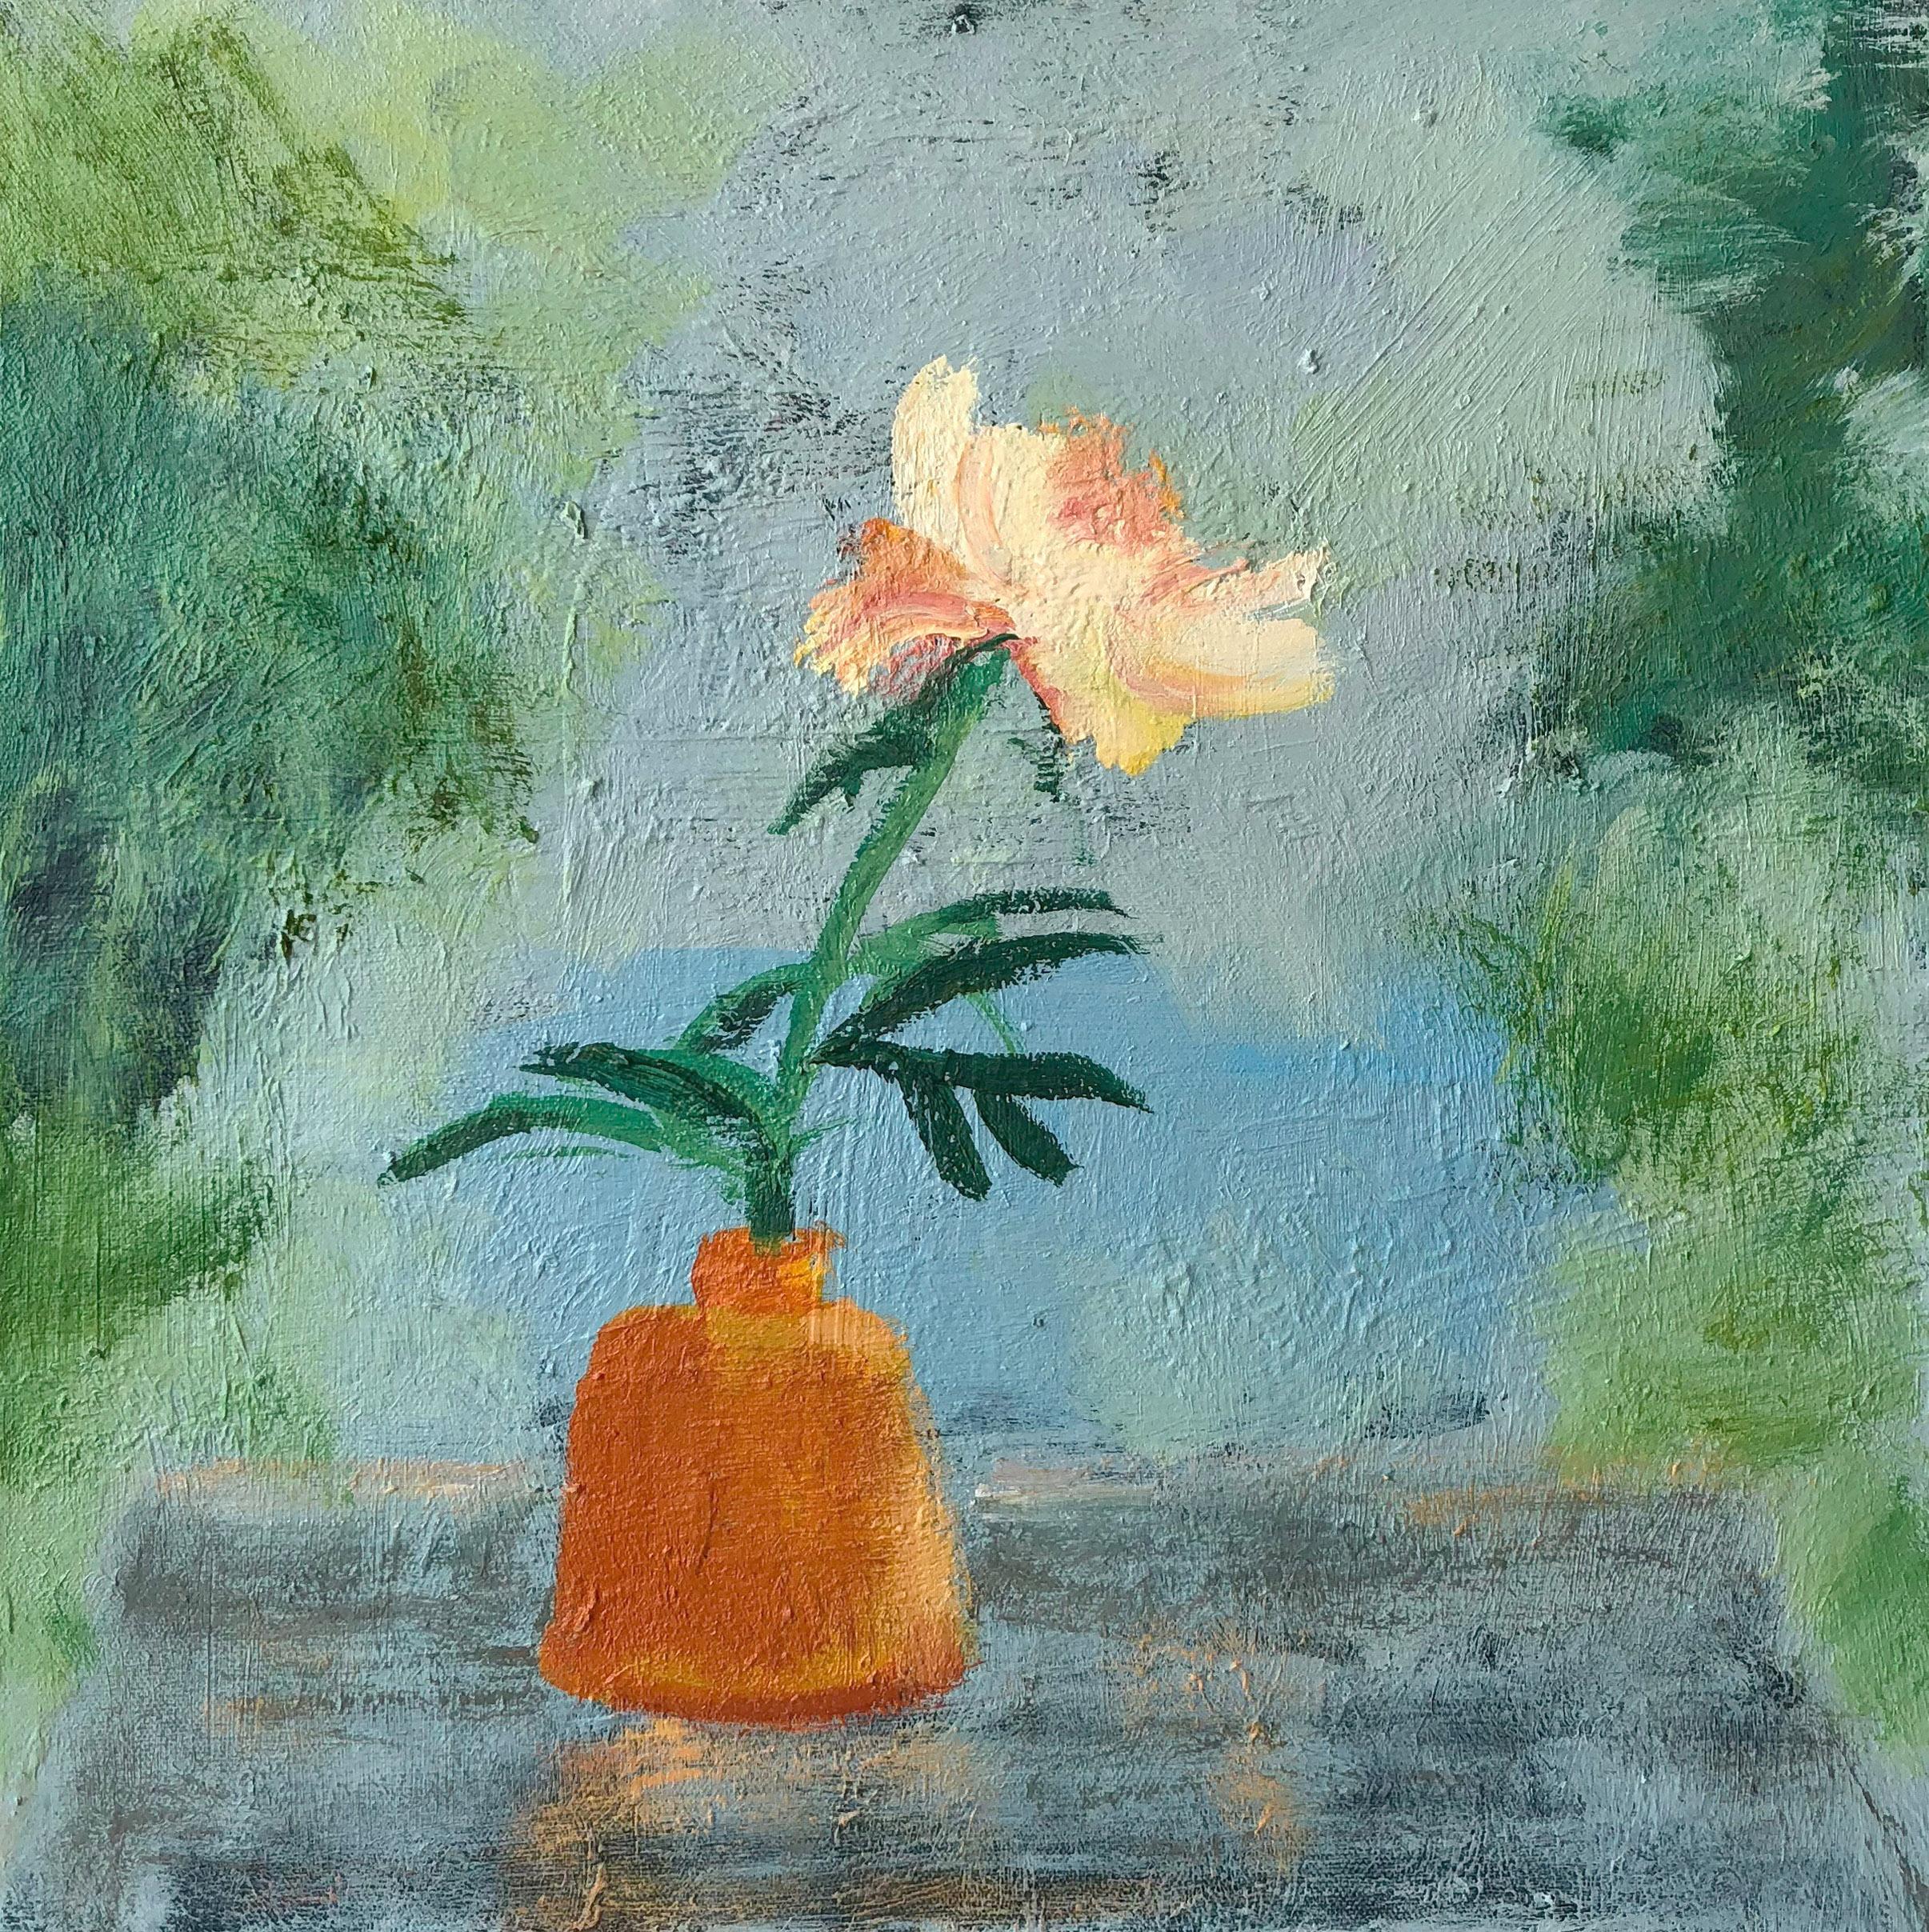 Melanie Parke Still-Life Painting - Stone Fruit, impressionist floral still life oil painting, 2019